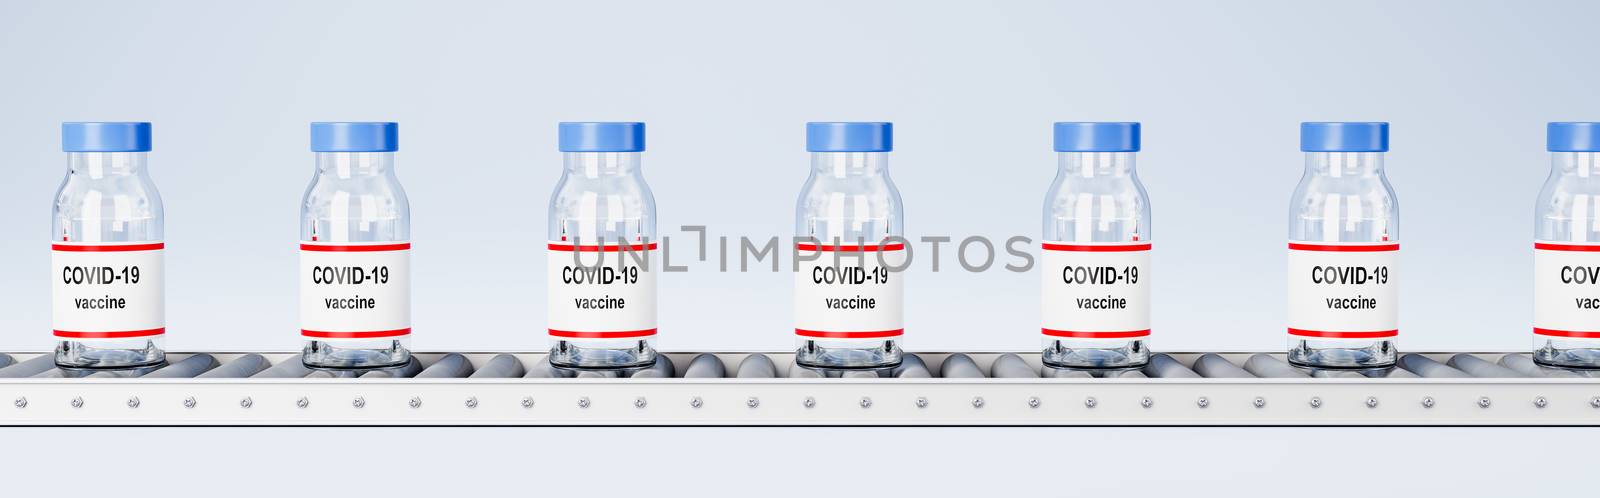 Many Covid 19 Vaccine Bottles on Conveyor Belt Roller on Light Blue Background 3D Render Illustration, Vaccine Production and Distribution Concept